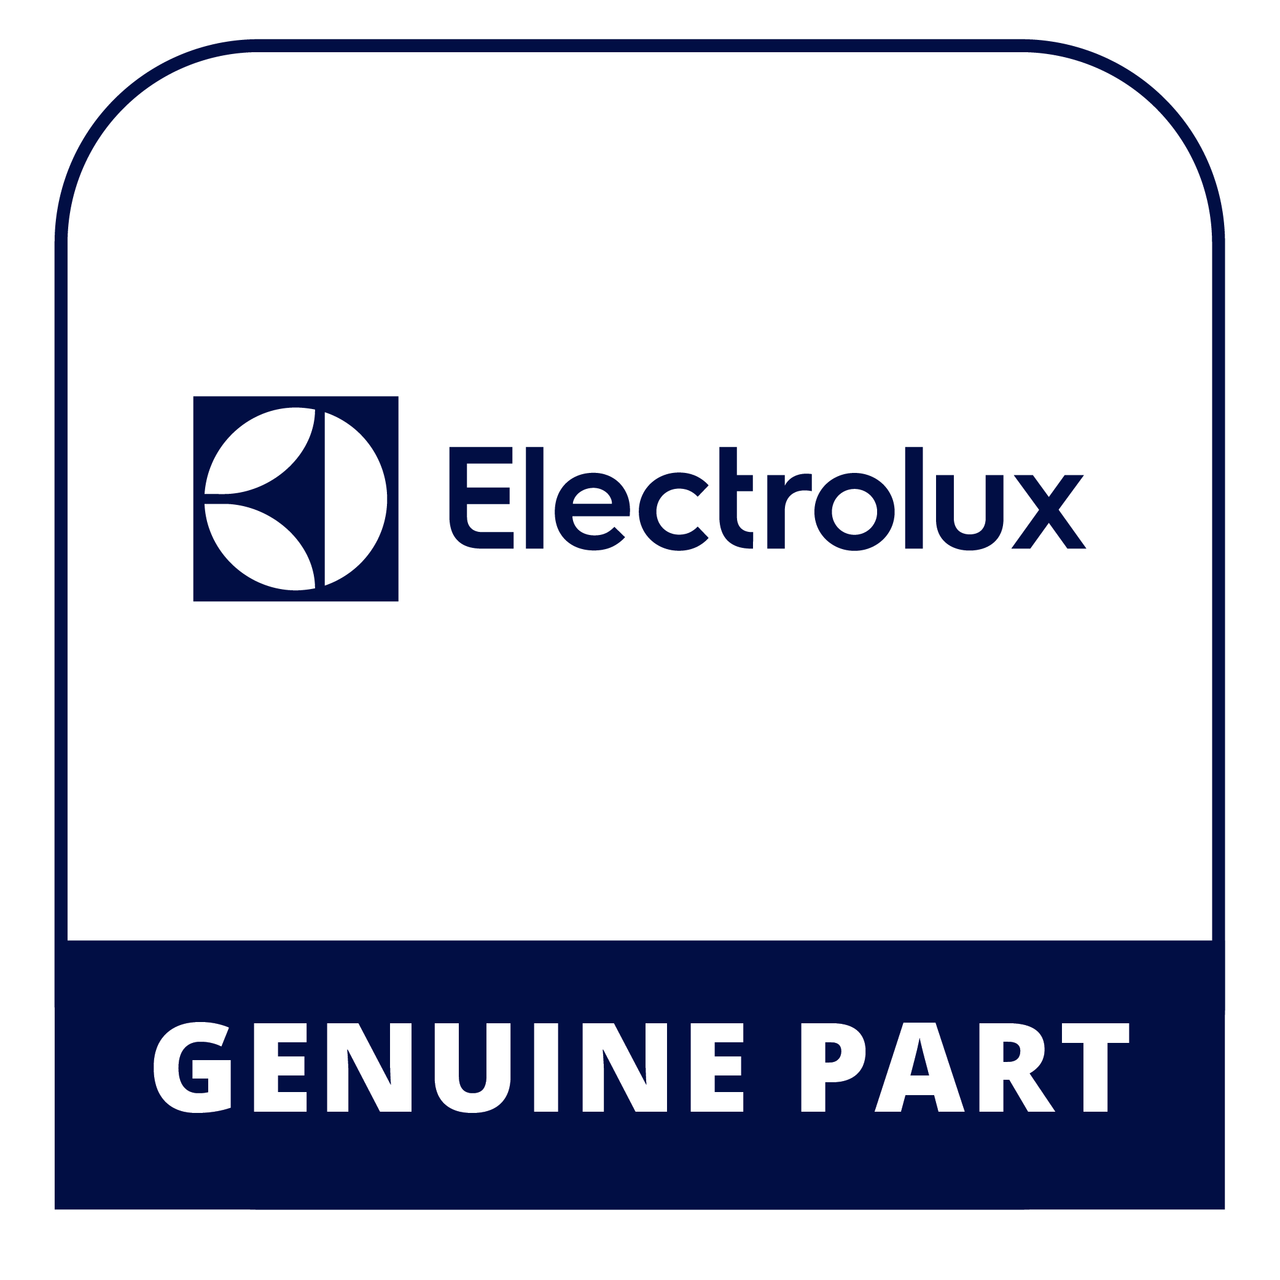 Frigidaire - Electrolux 240323952 Label-Module Cover - Genuine Electrolux Part